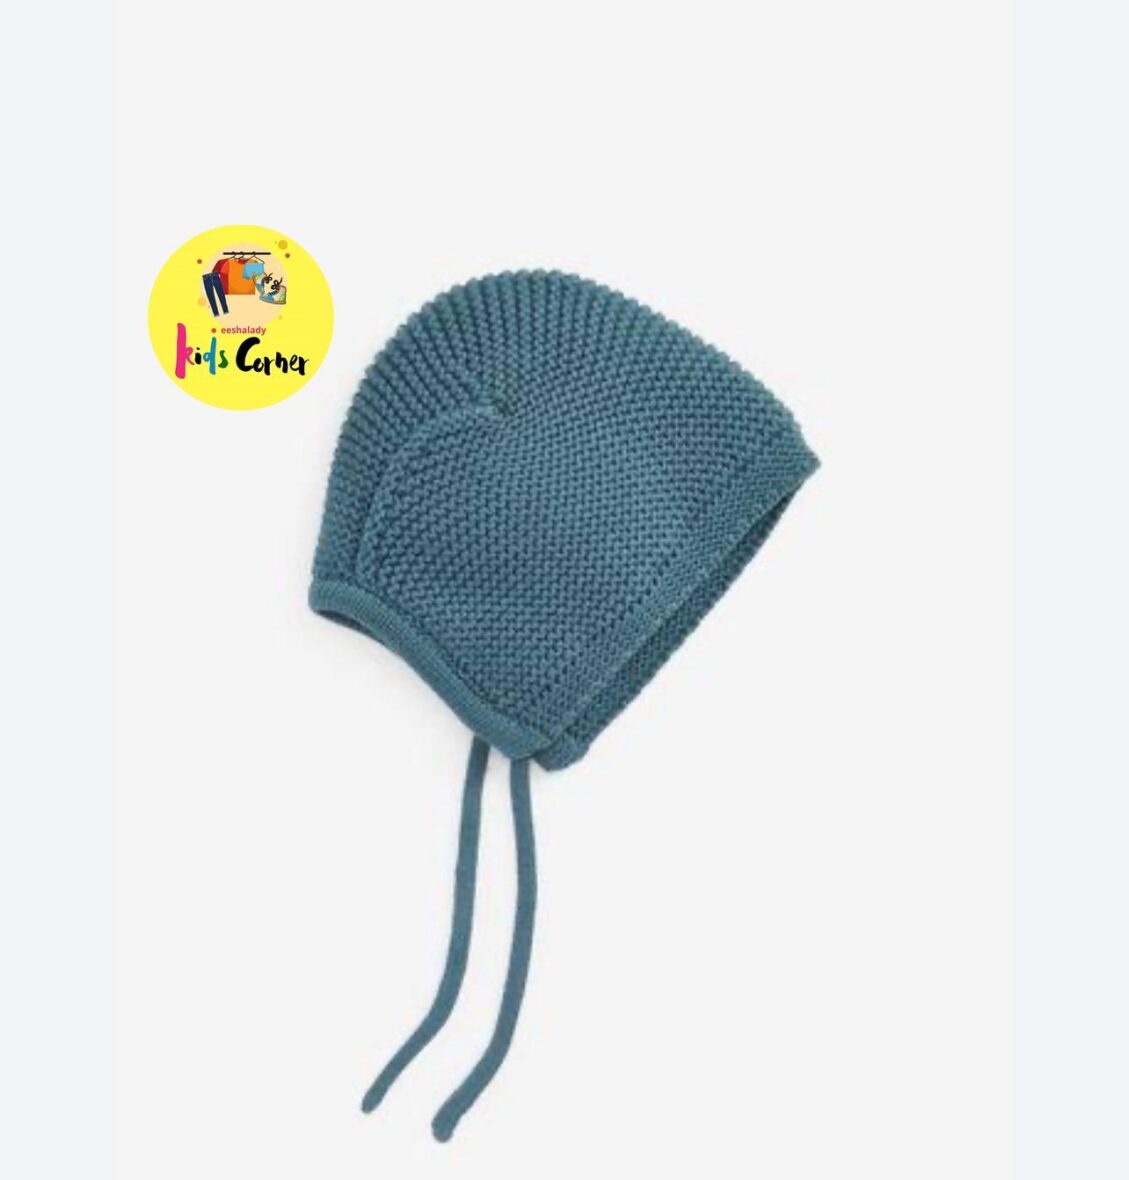 NEXT Knit Baby Cap